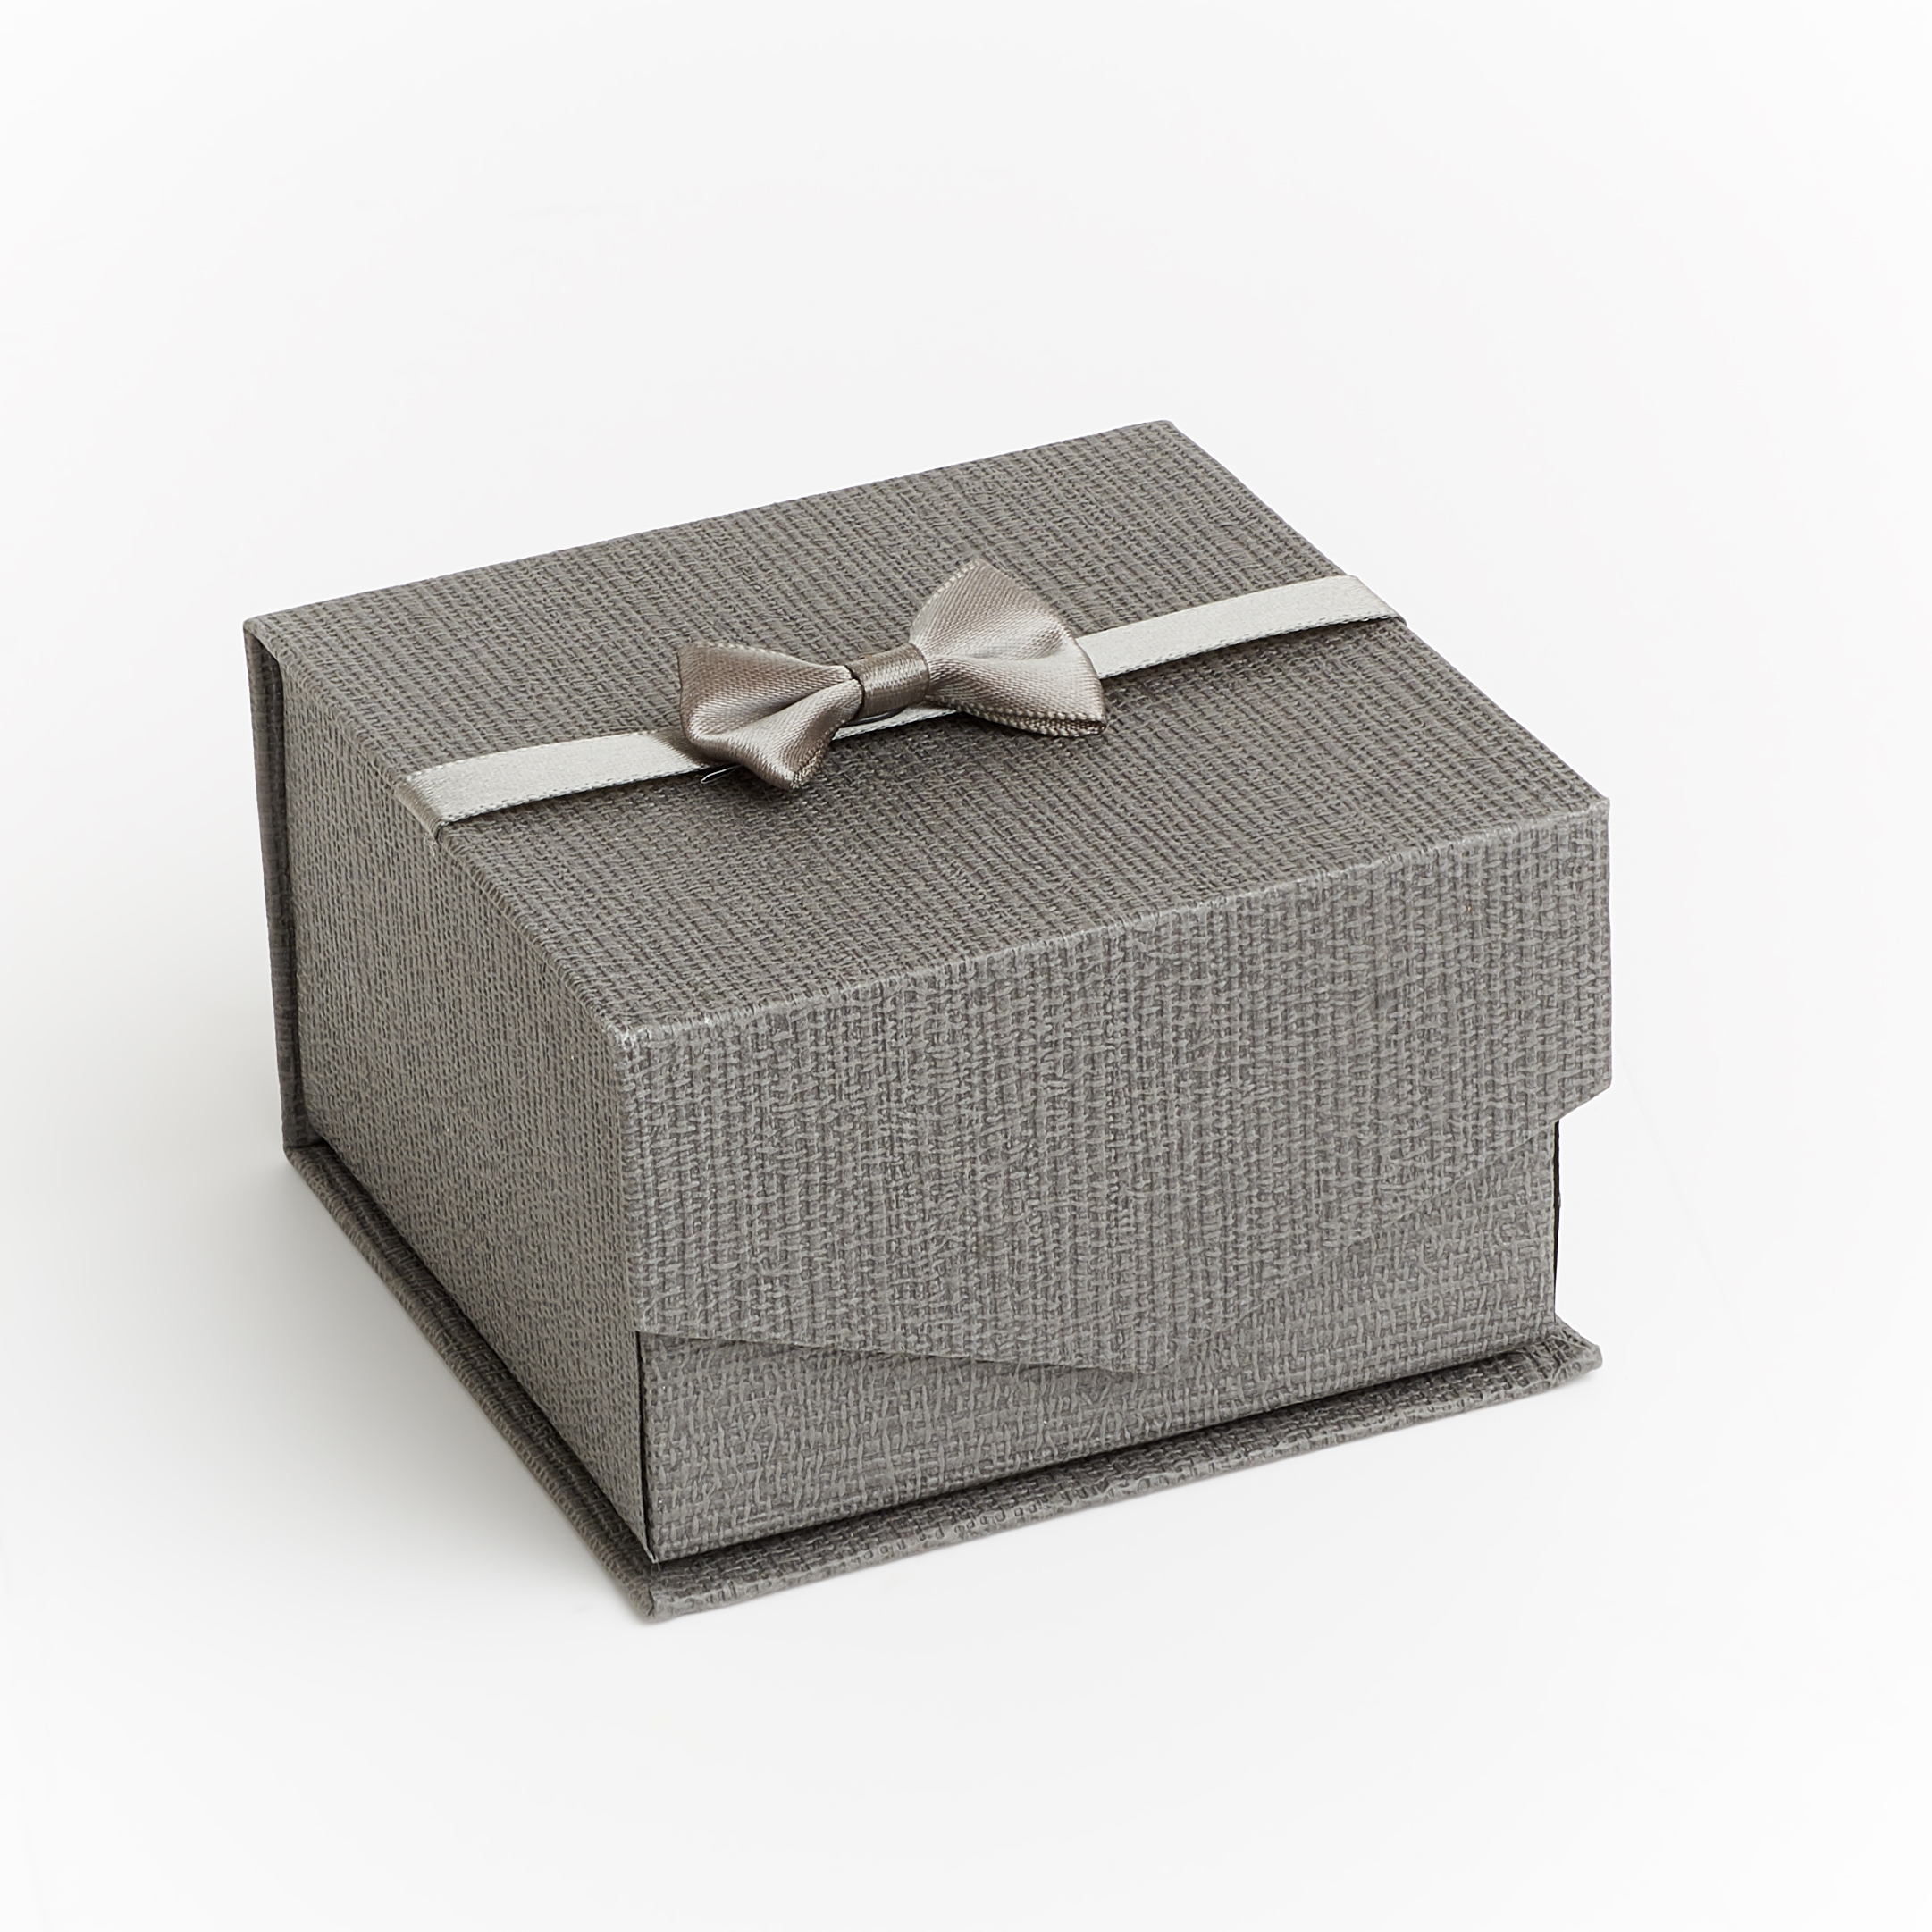 Подарочная упаковка (картон, текстиль) под браслет/часы (коробка) (серый) 95х95х60 мм